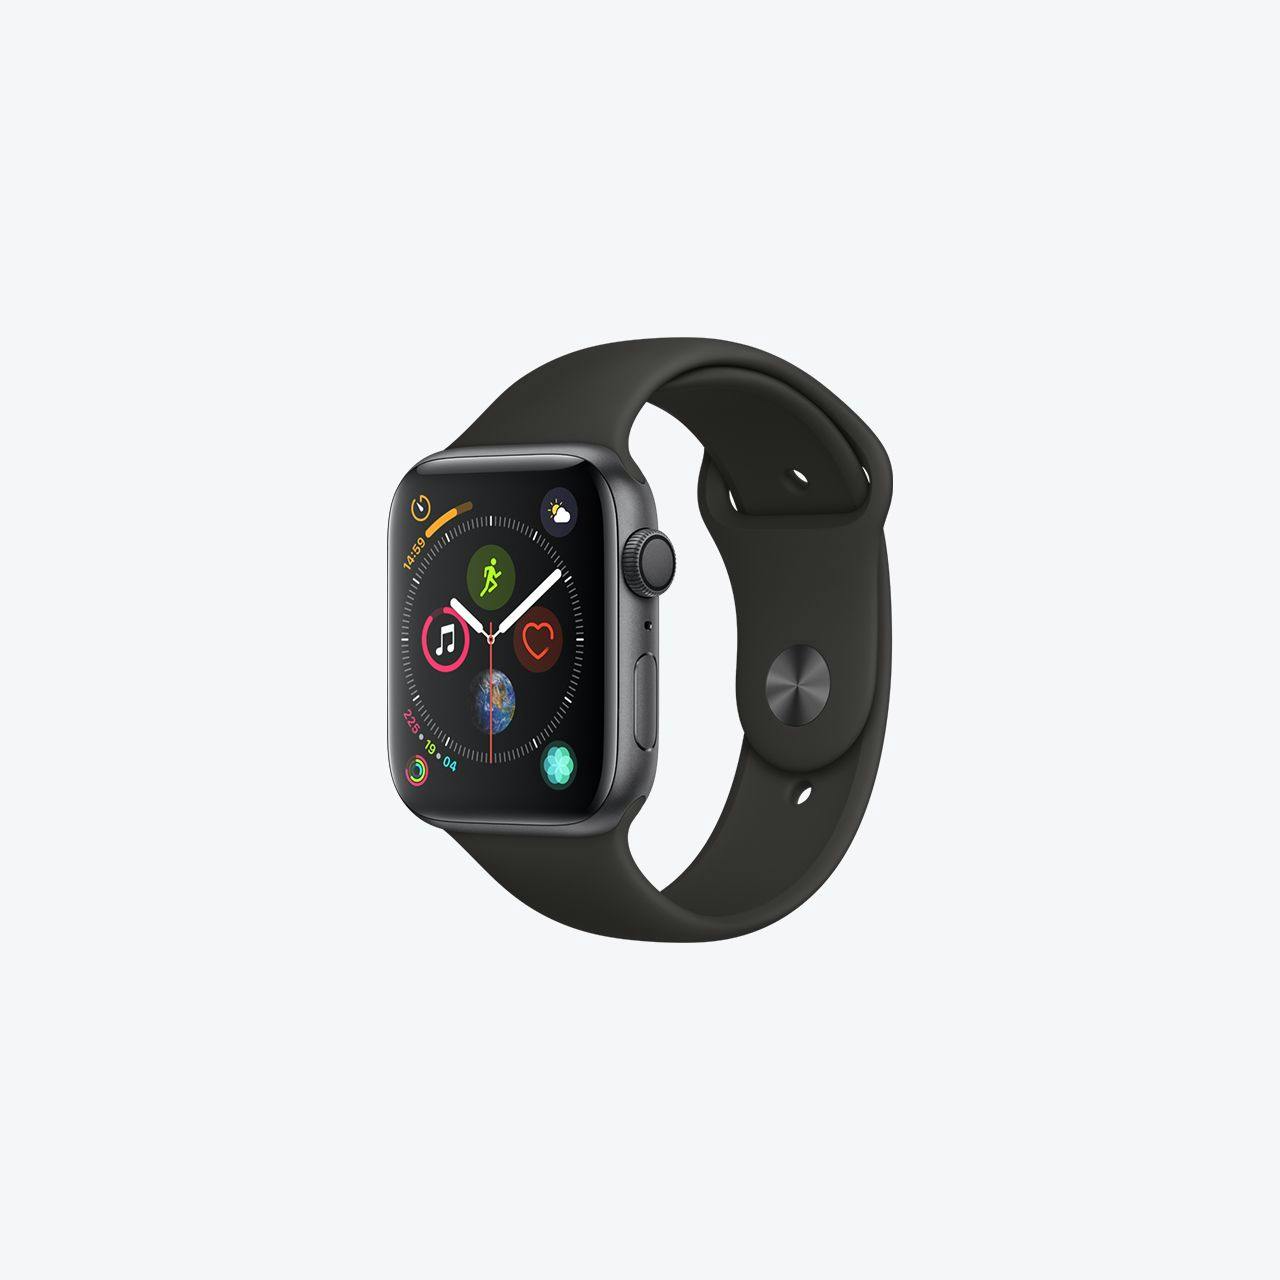 Image of Apple Watch Series 4.